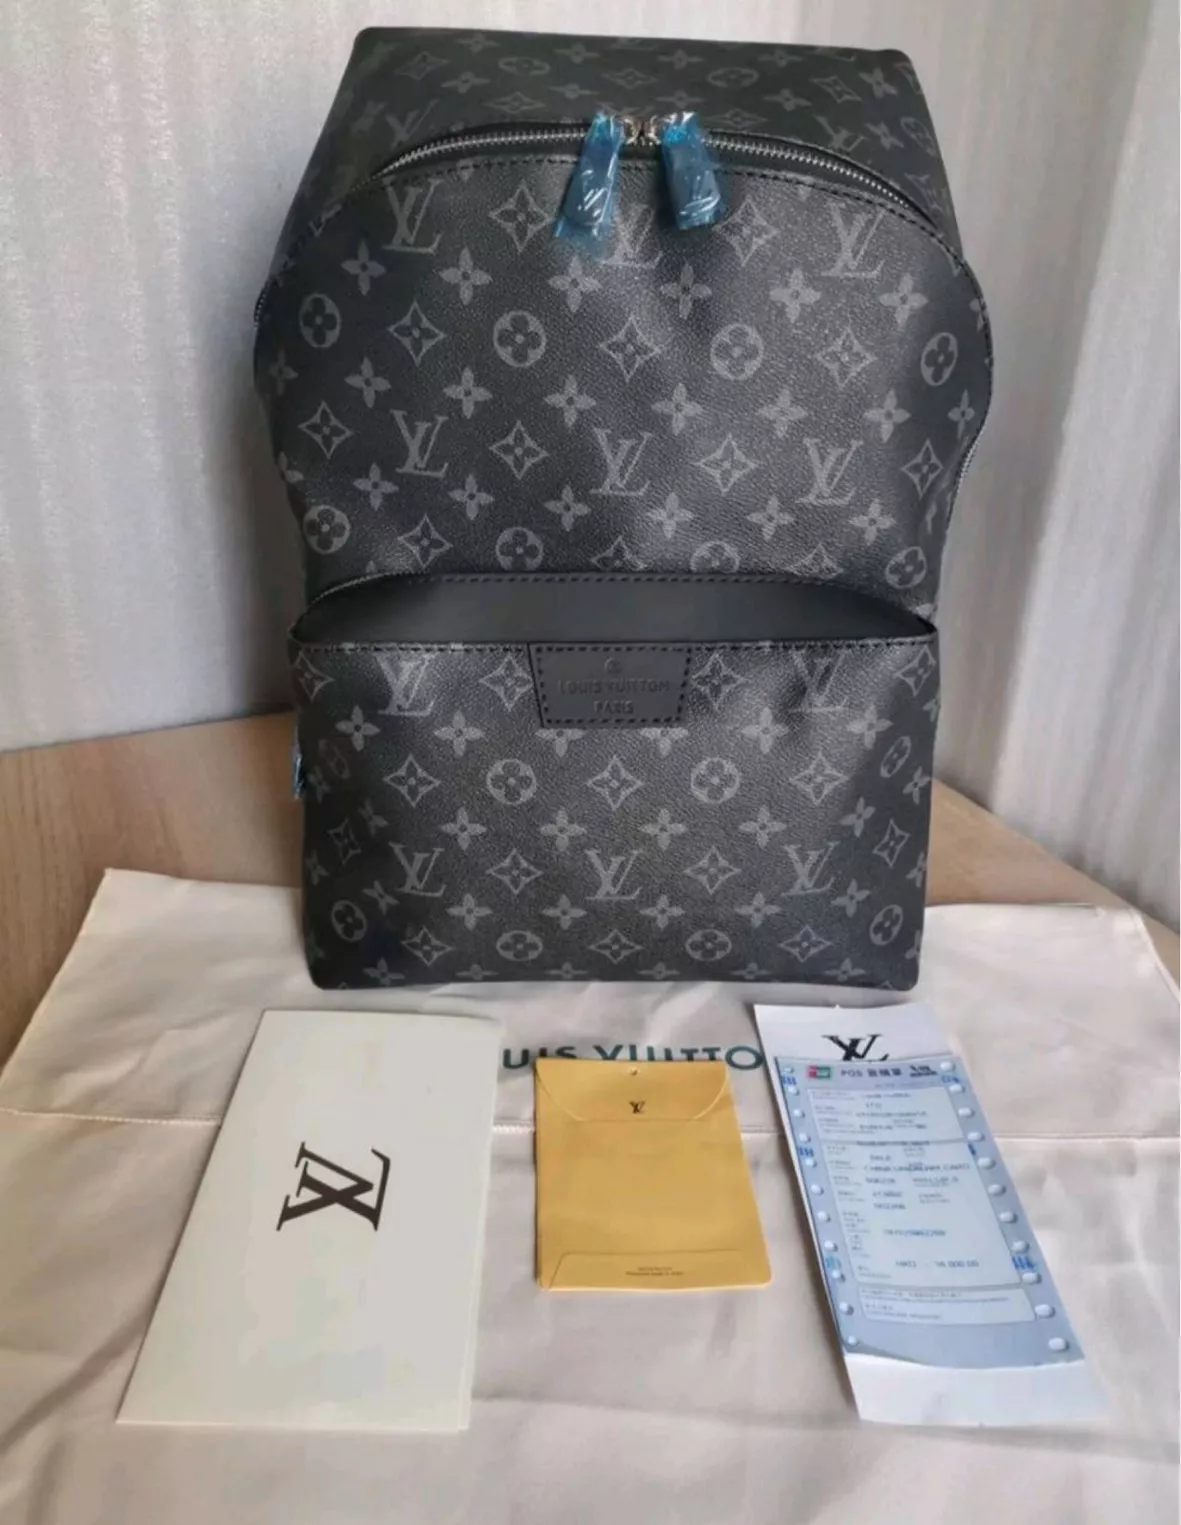 LV bumbag on dhgate Louis Vuitton bumbag #LTKitbag #LTKsalealert  #LTKunder100